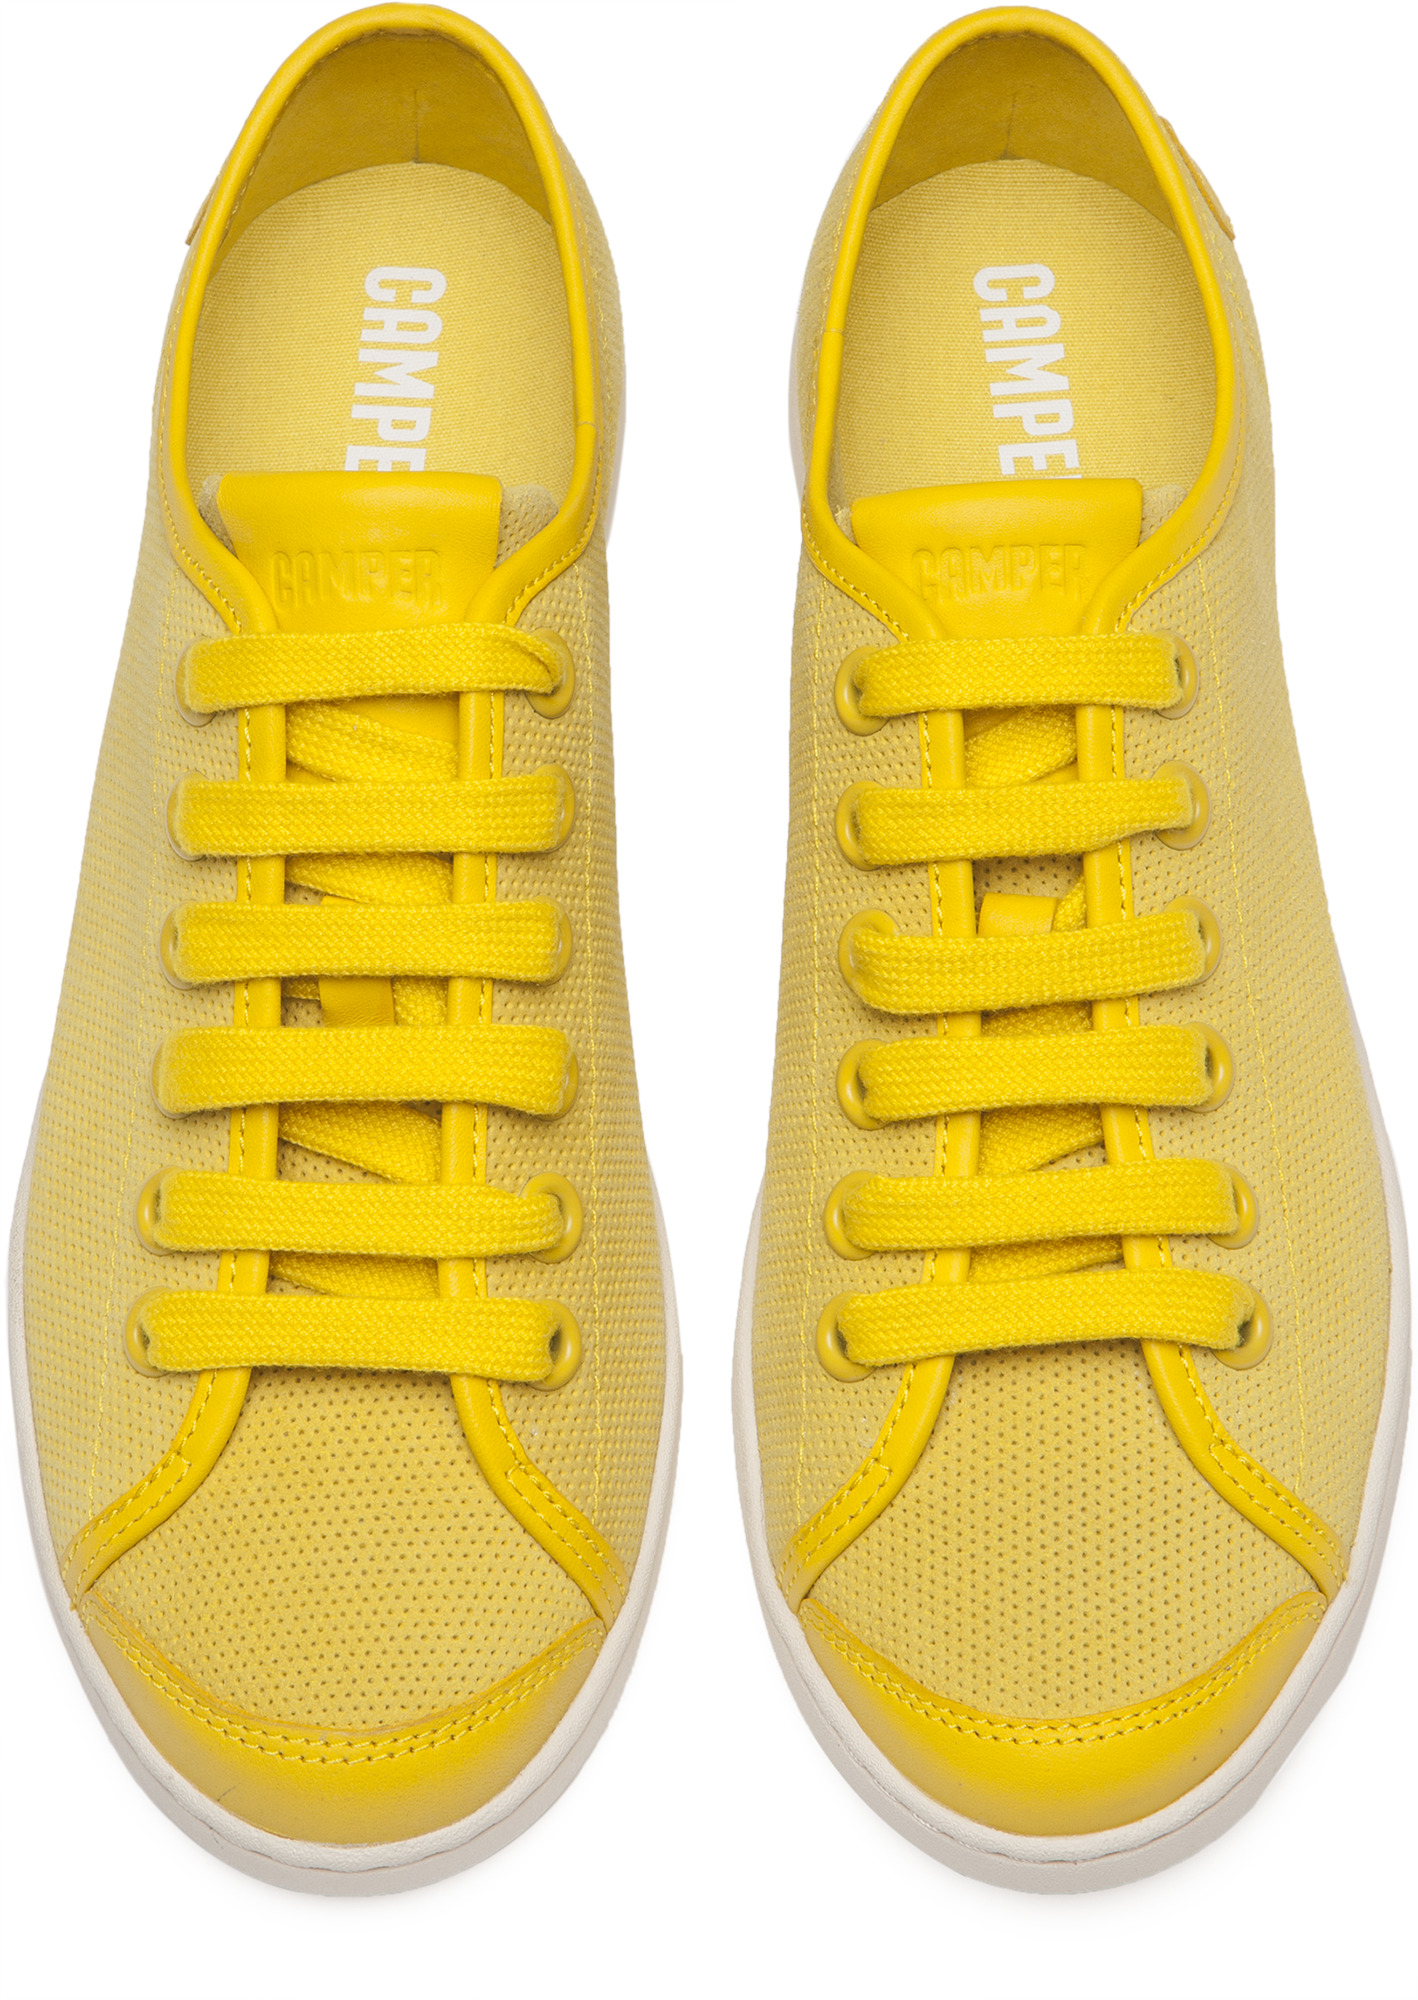 Кроссовки желтого цвета. Кроссовки Camper желтые. Ботинки Кампер желтые. Кампер обувь женская желтые. Marco Polo кеды женские желтые.